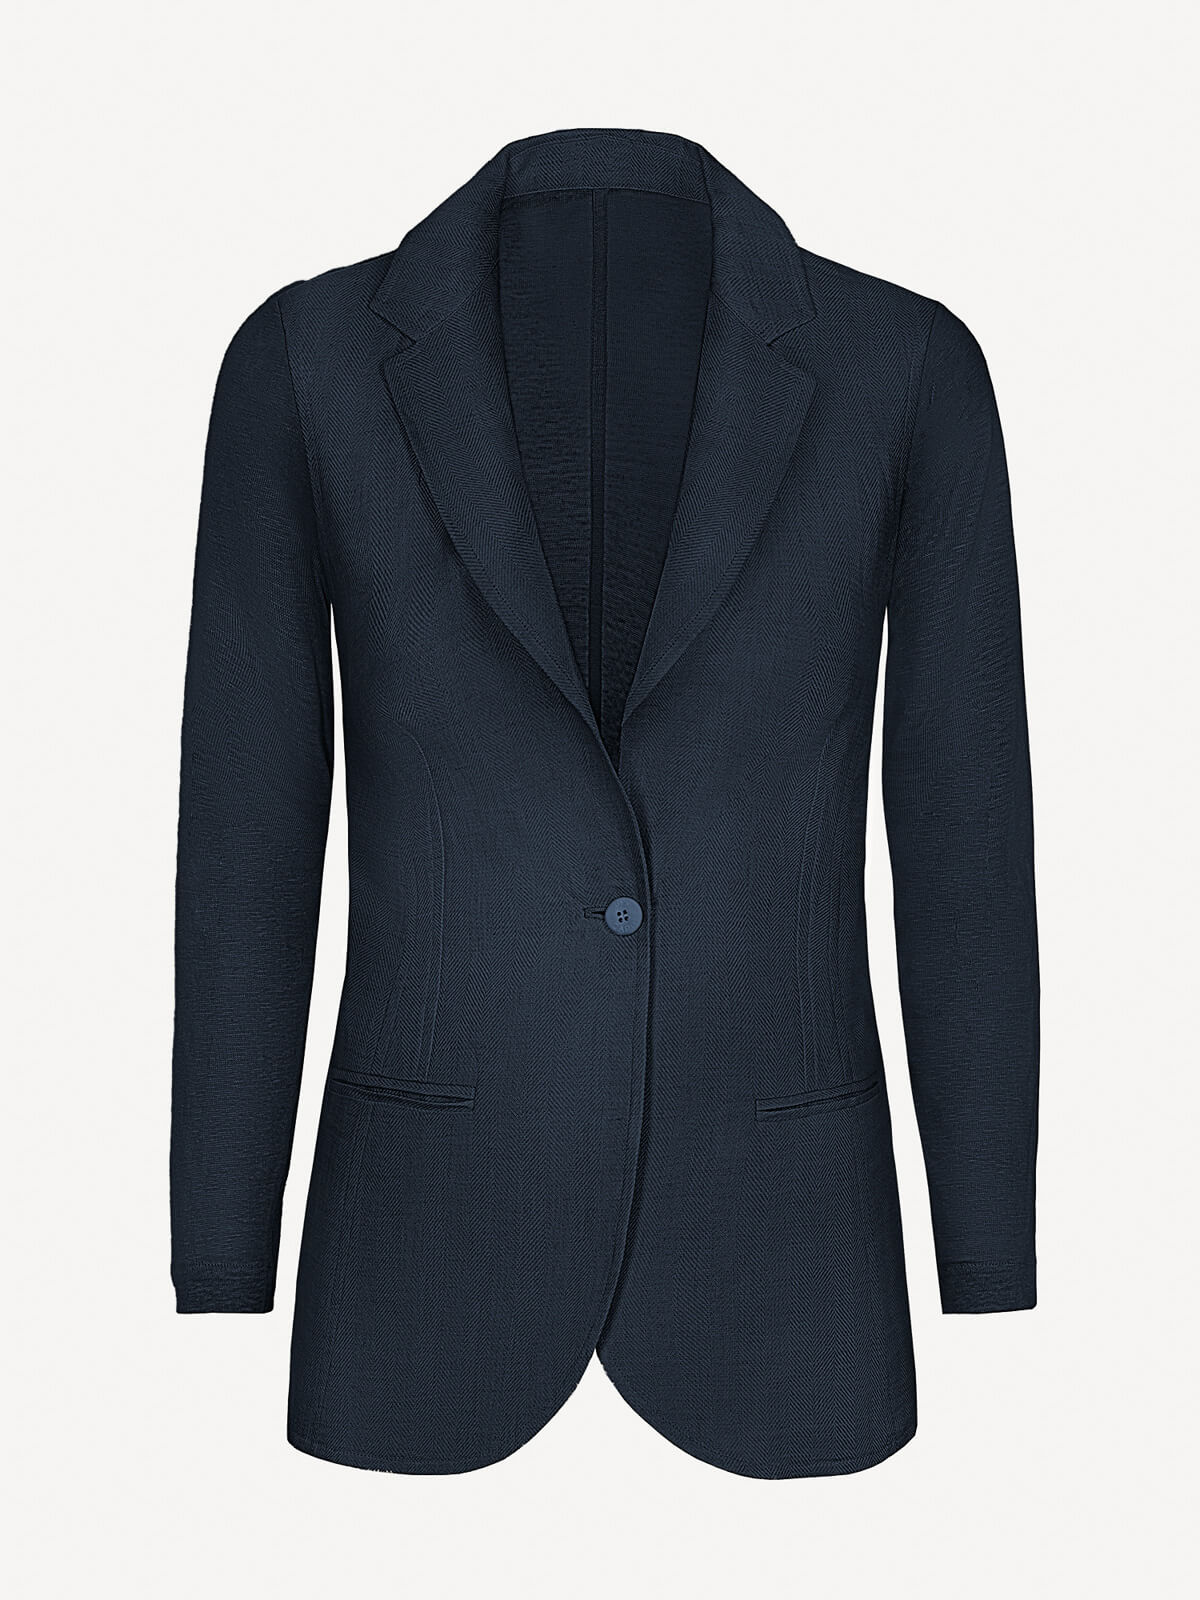 Giacca Sud Woman 100% Capri blue linen jacket front